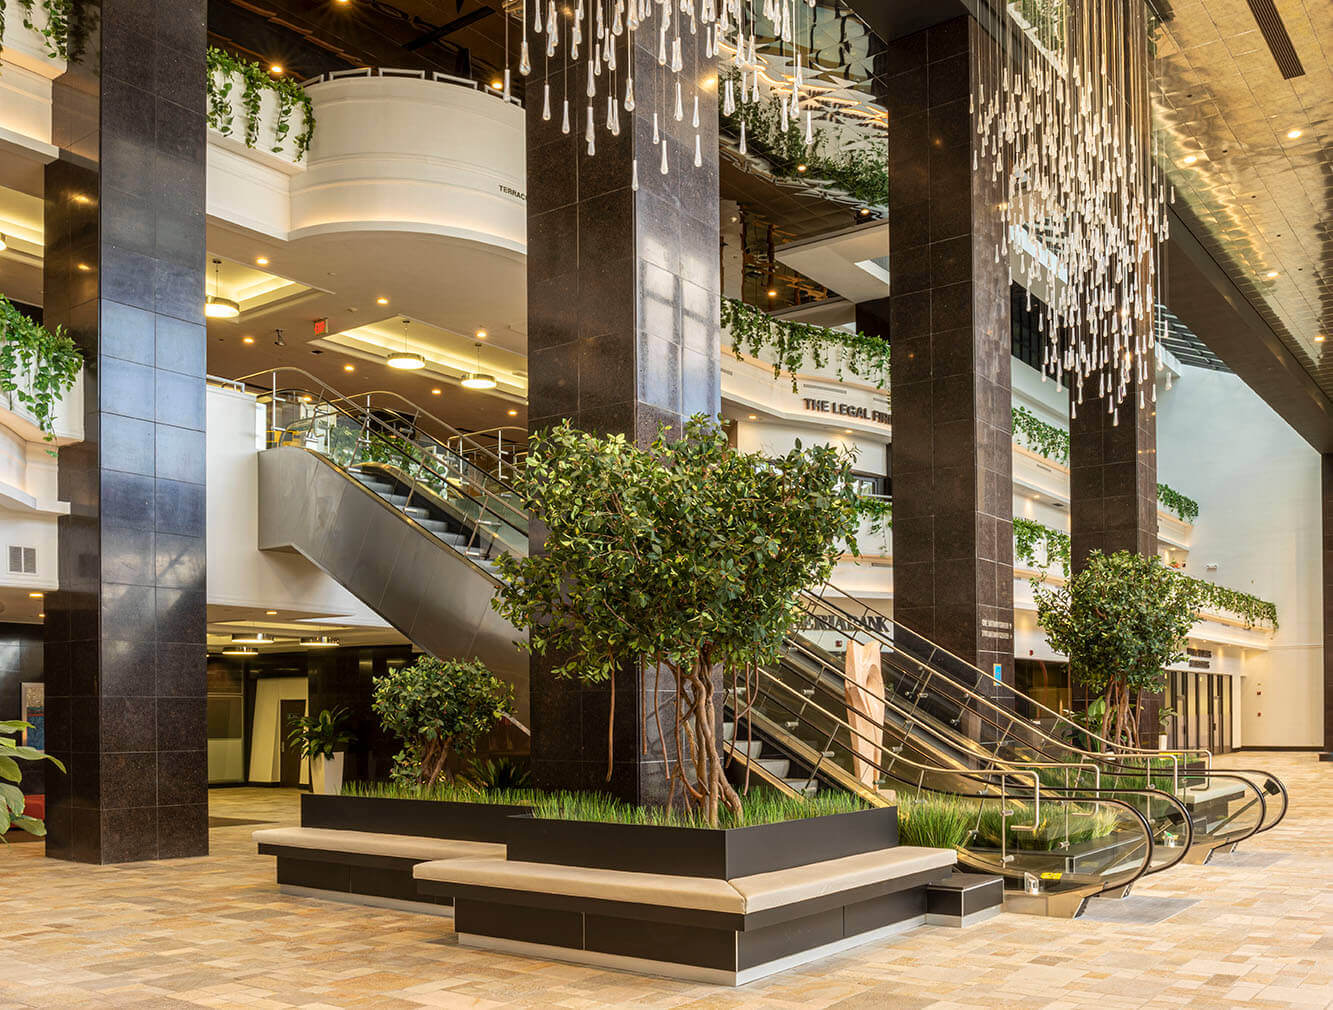 Wide angle view of Artficial Mangrove Trees and Artficial Onion Grass surrounding escalators at Datran Business Center